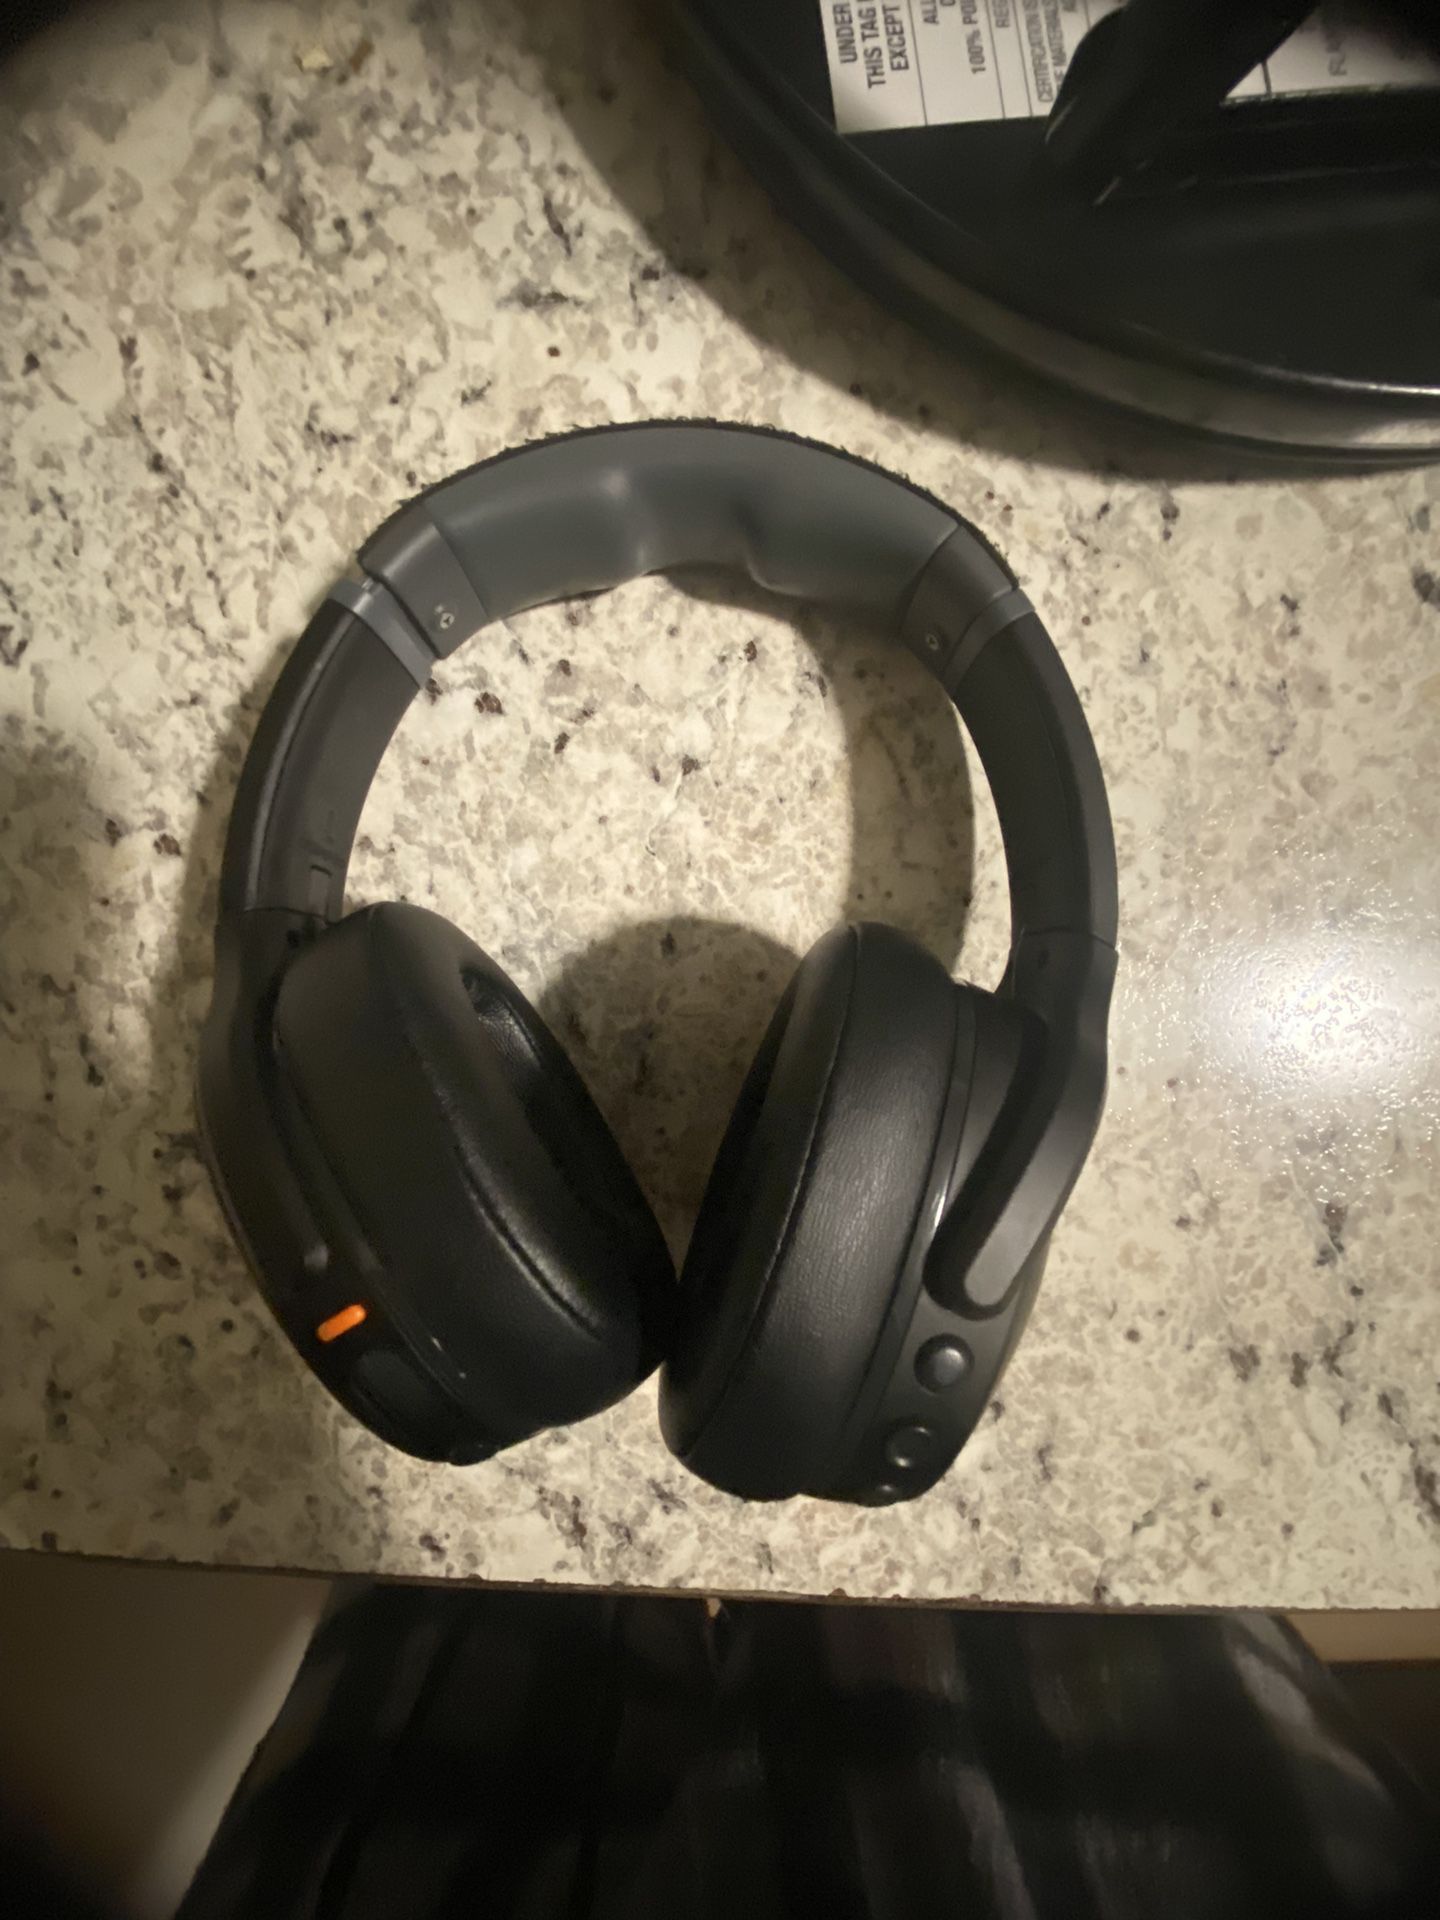 Crusher EVOS skullcandy Headphones